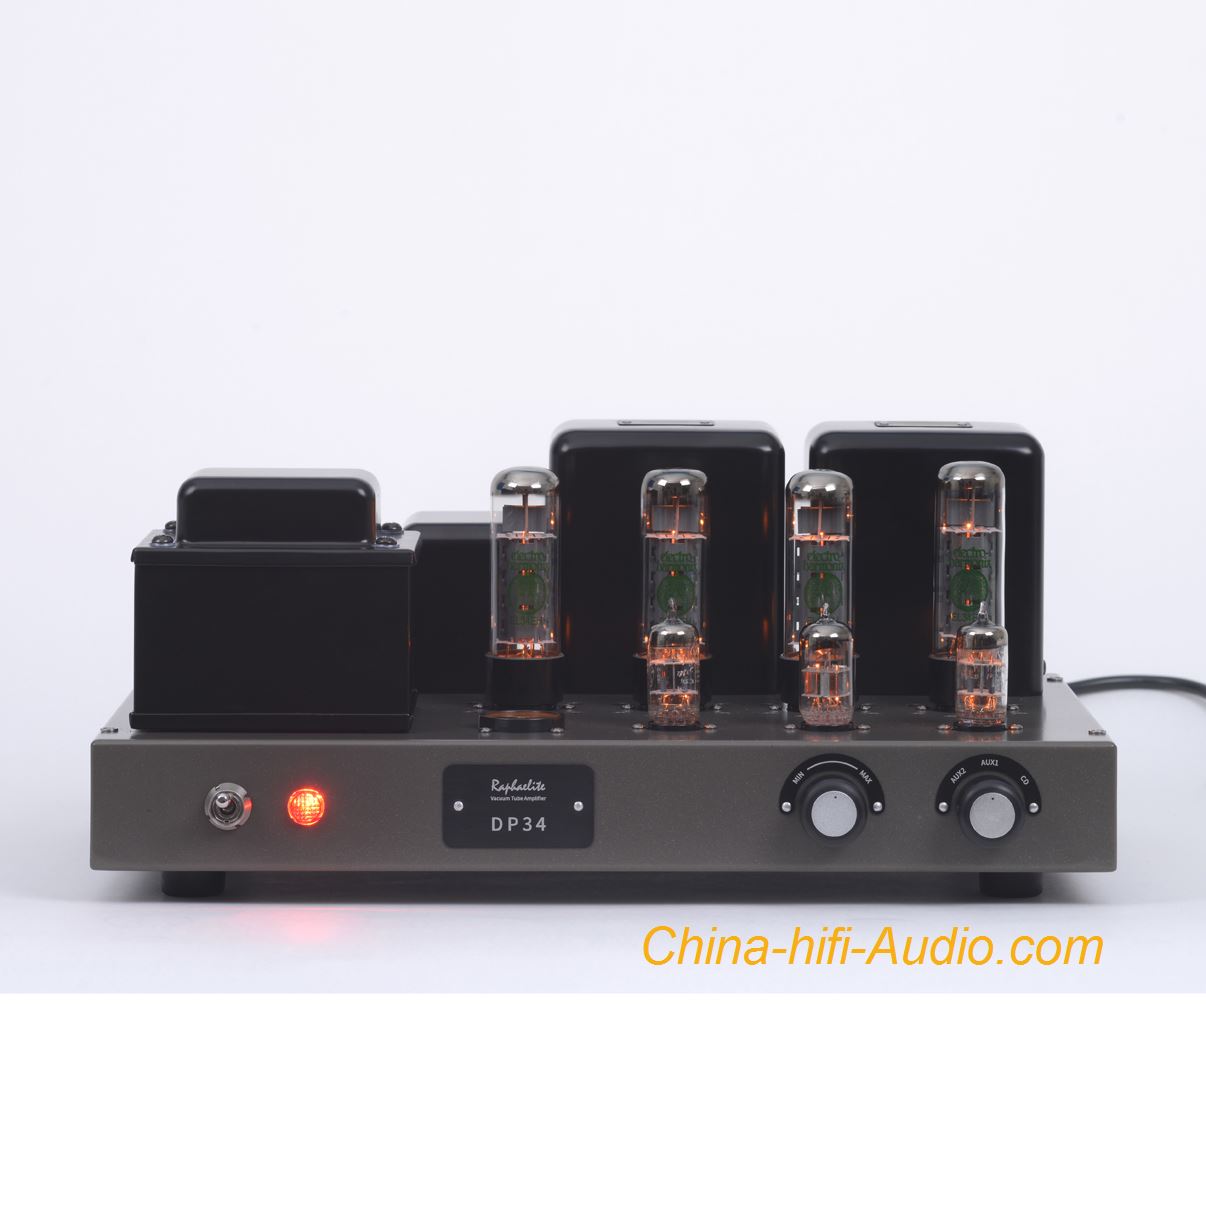 Raphaelite DP34 EL34x4 integrated amplifier HiFi audio stereo tube amp push-pull